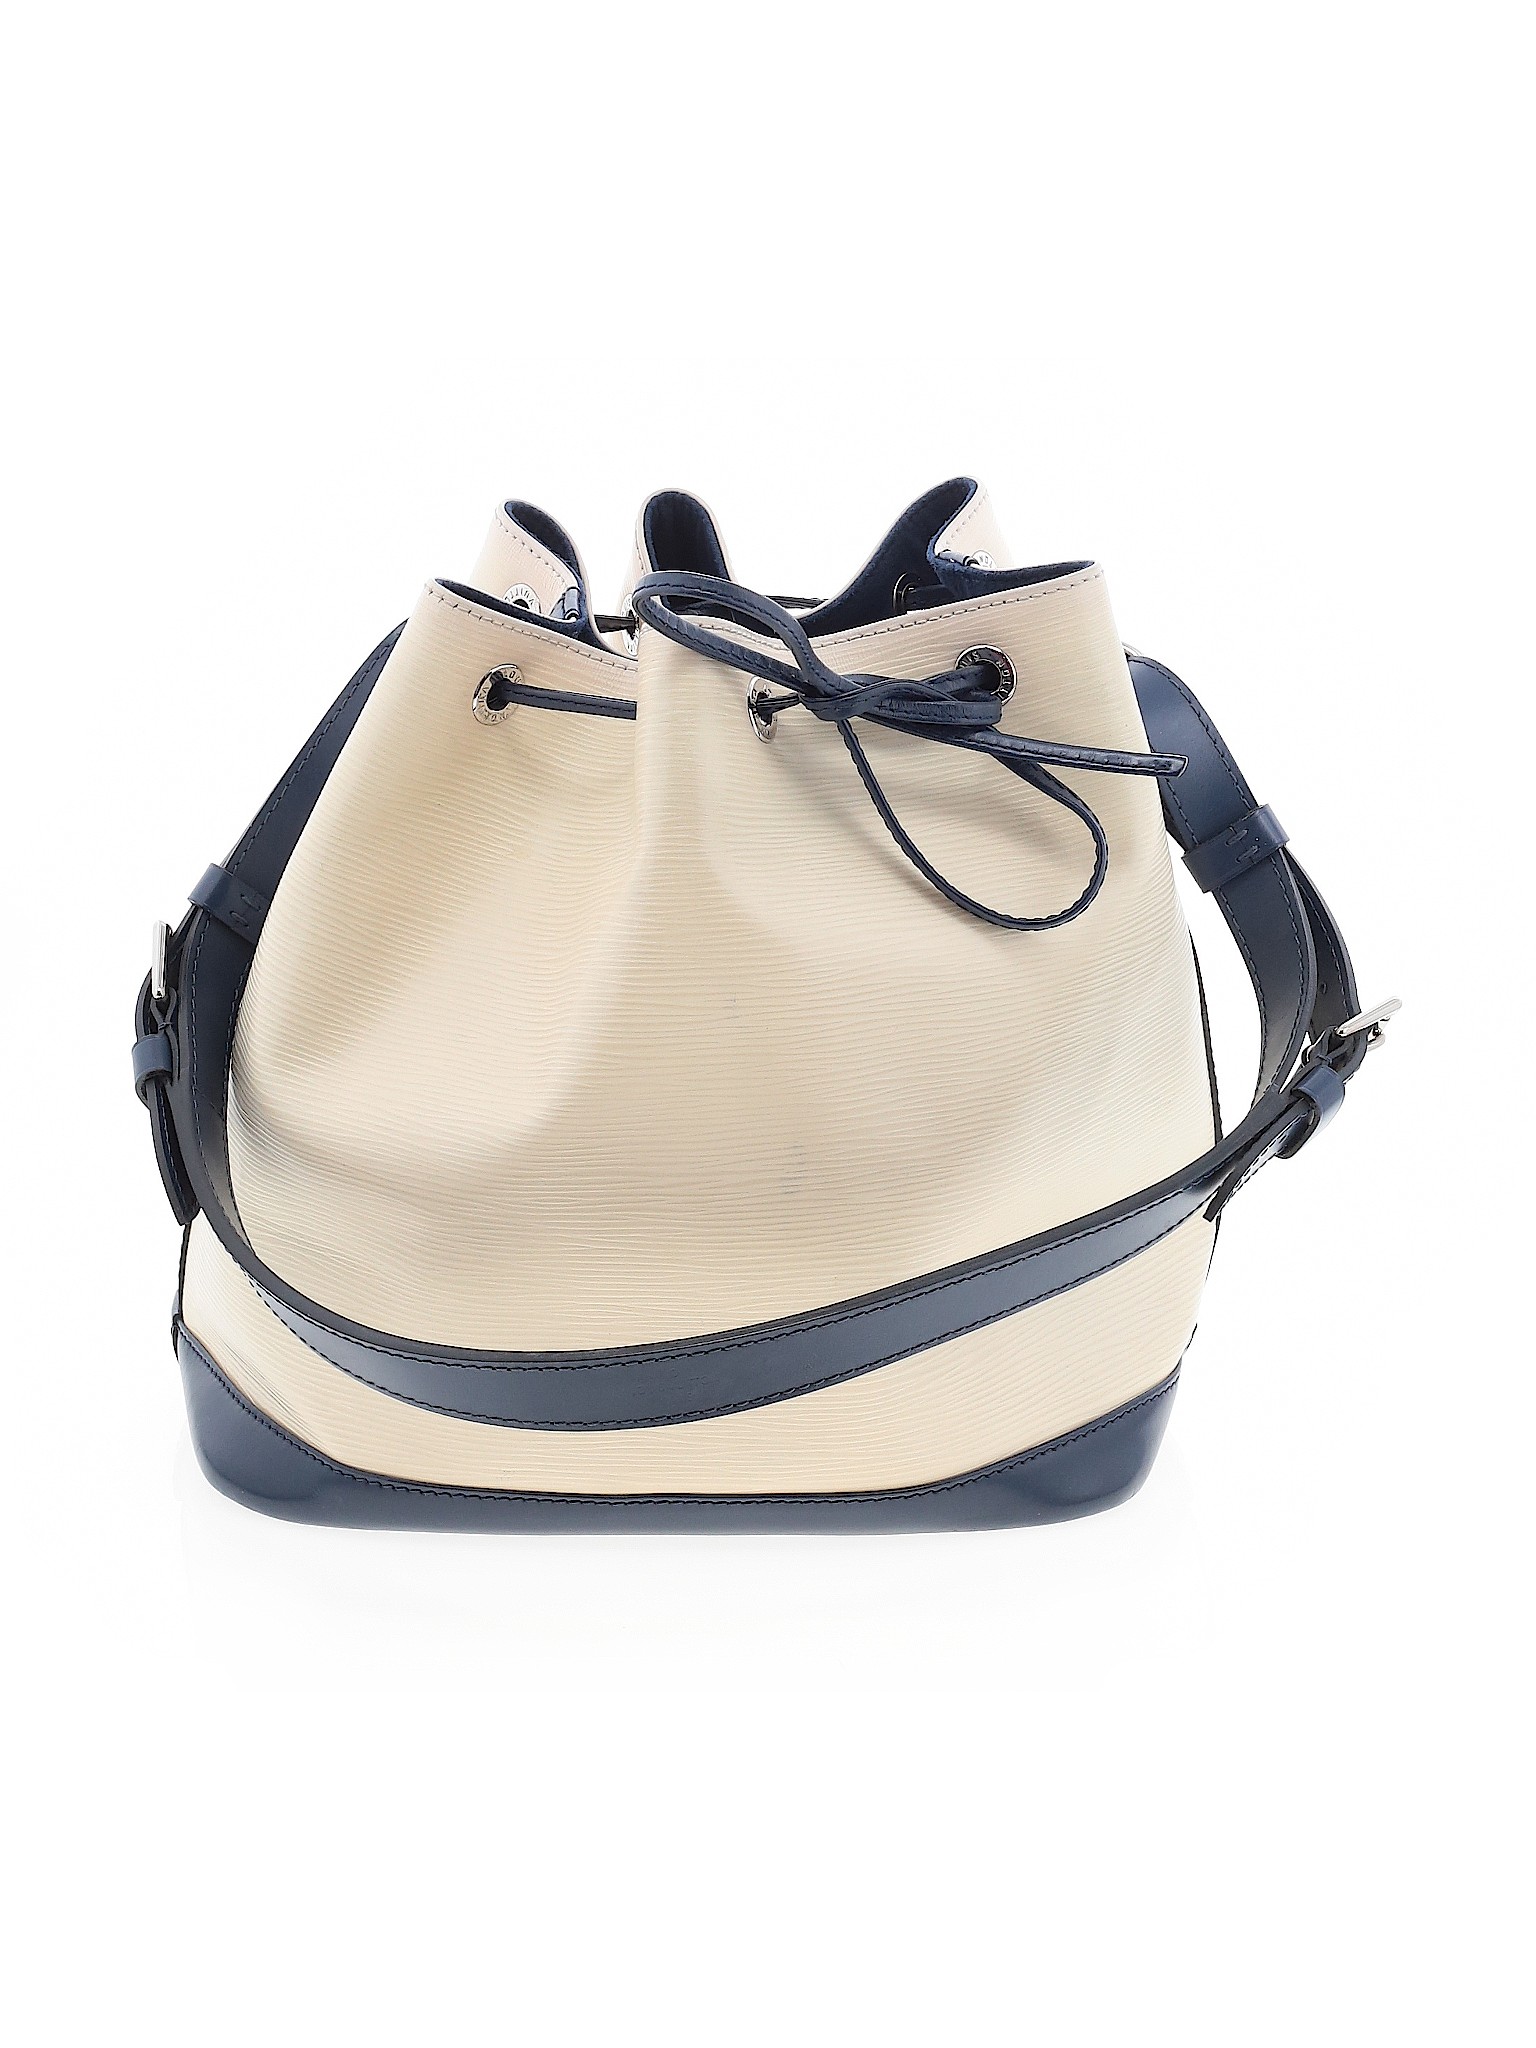 Louis Vuitton Women Ivory Leather Bucket Bag One Size | eBay